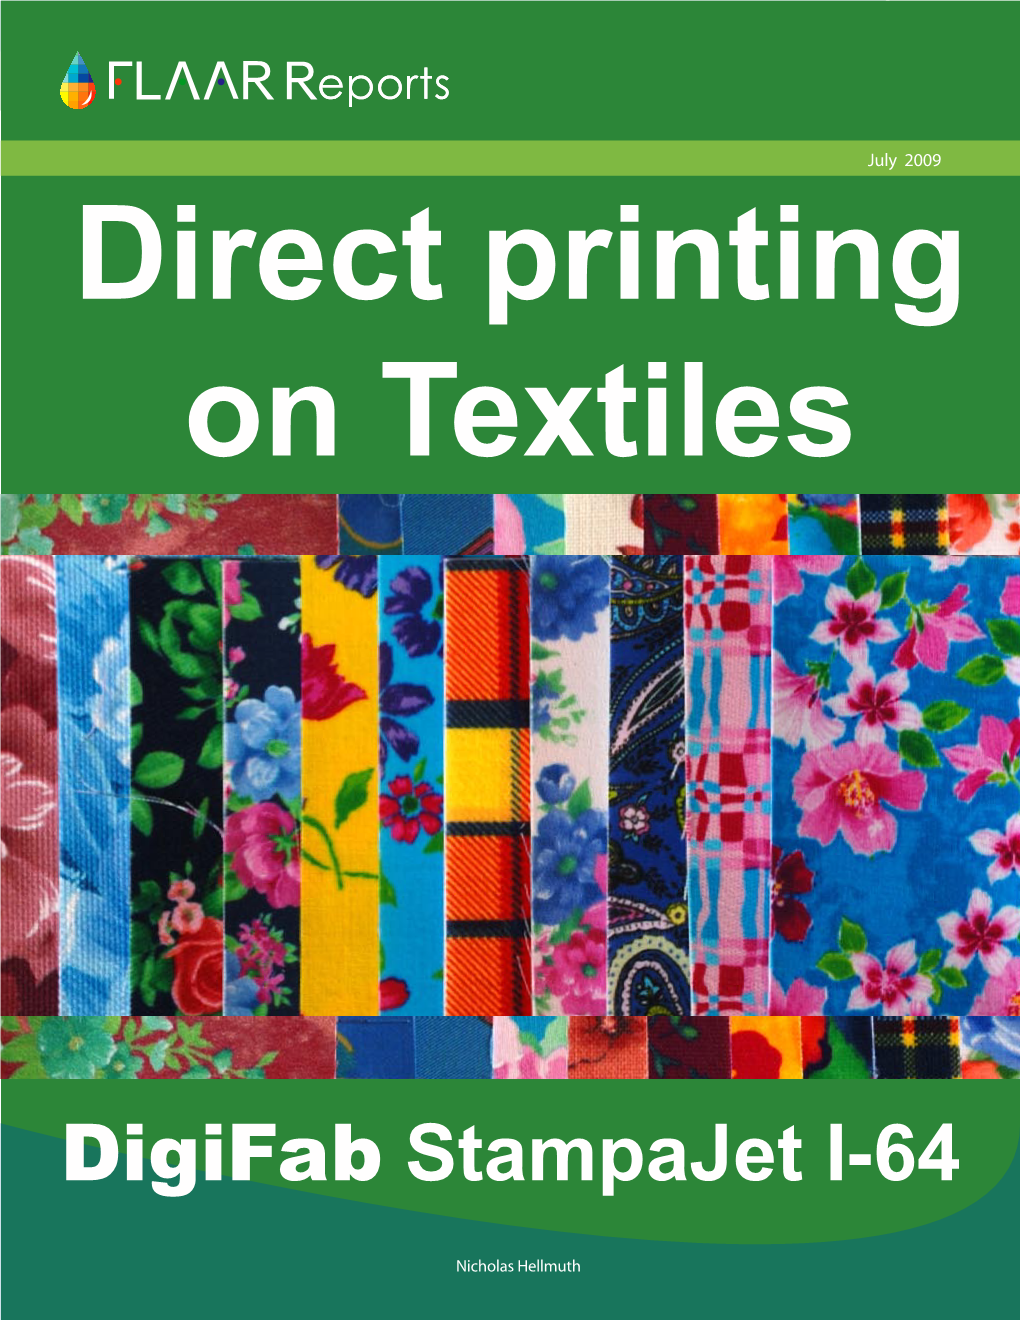 Digifab Stampajet I-64 Textile Printer 1